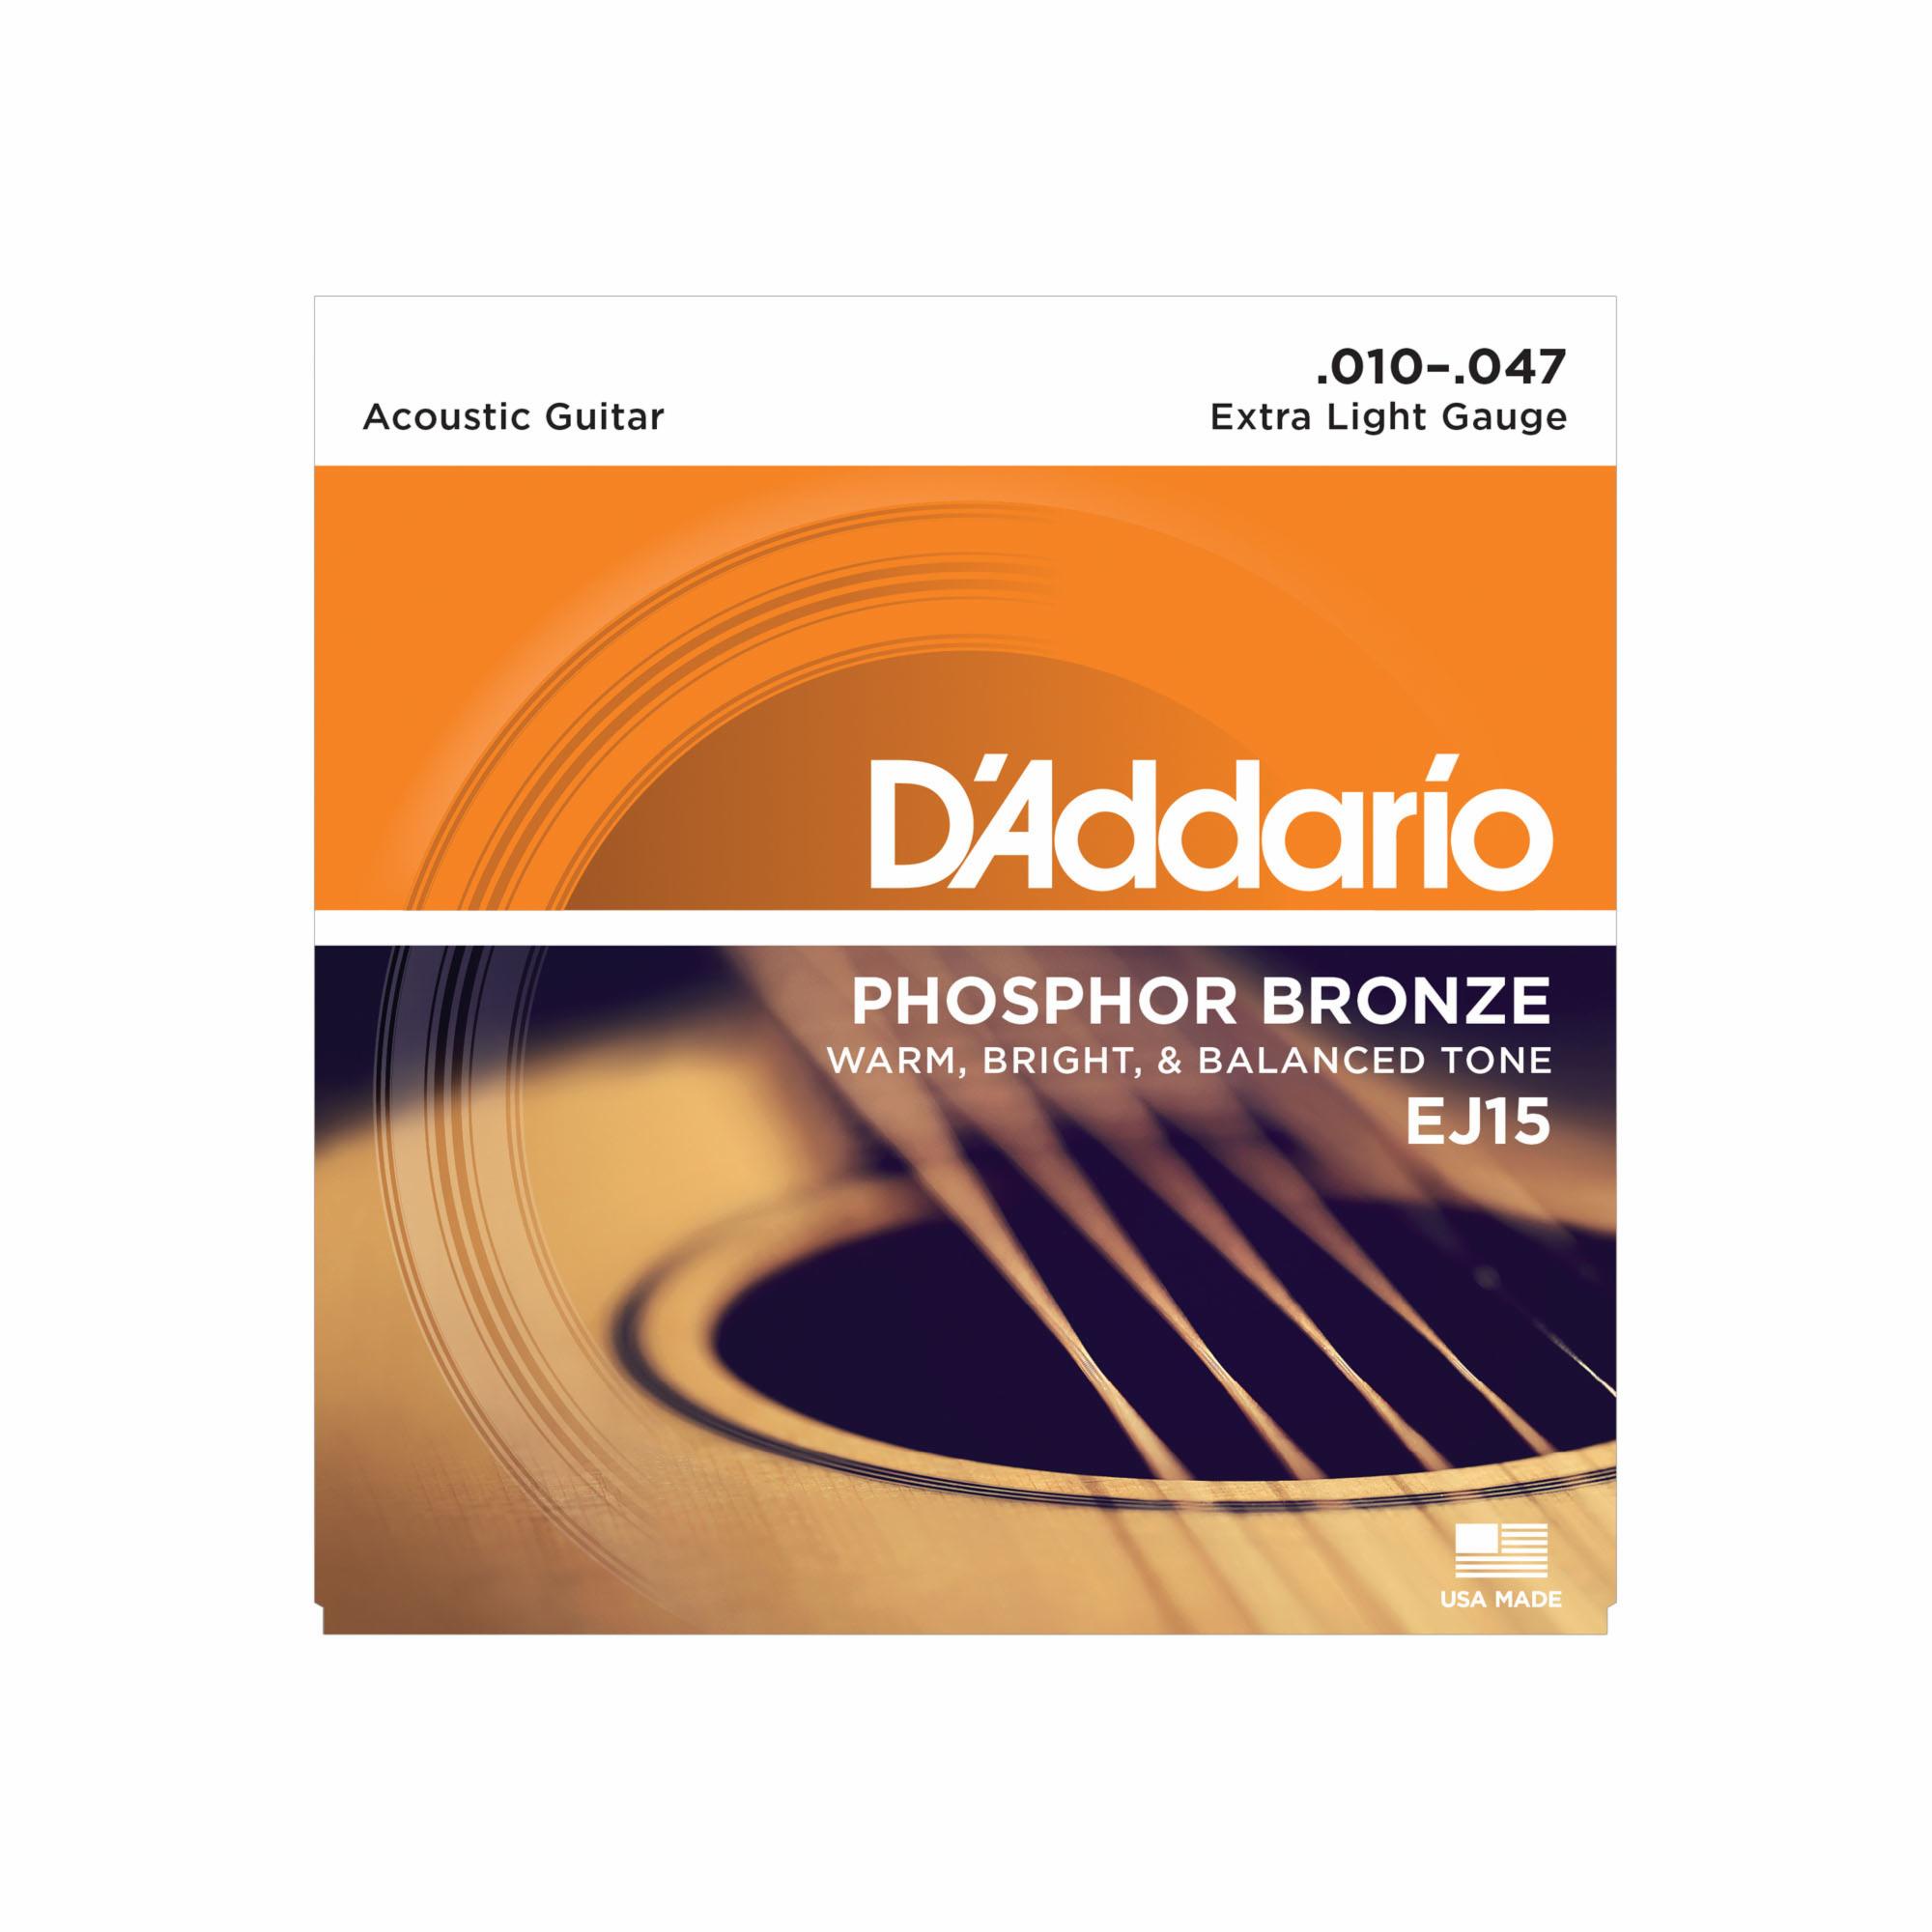 D'Addario Phosphor Bronze Guitar Strings